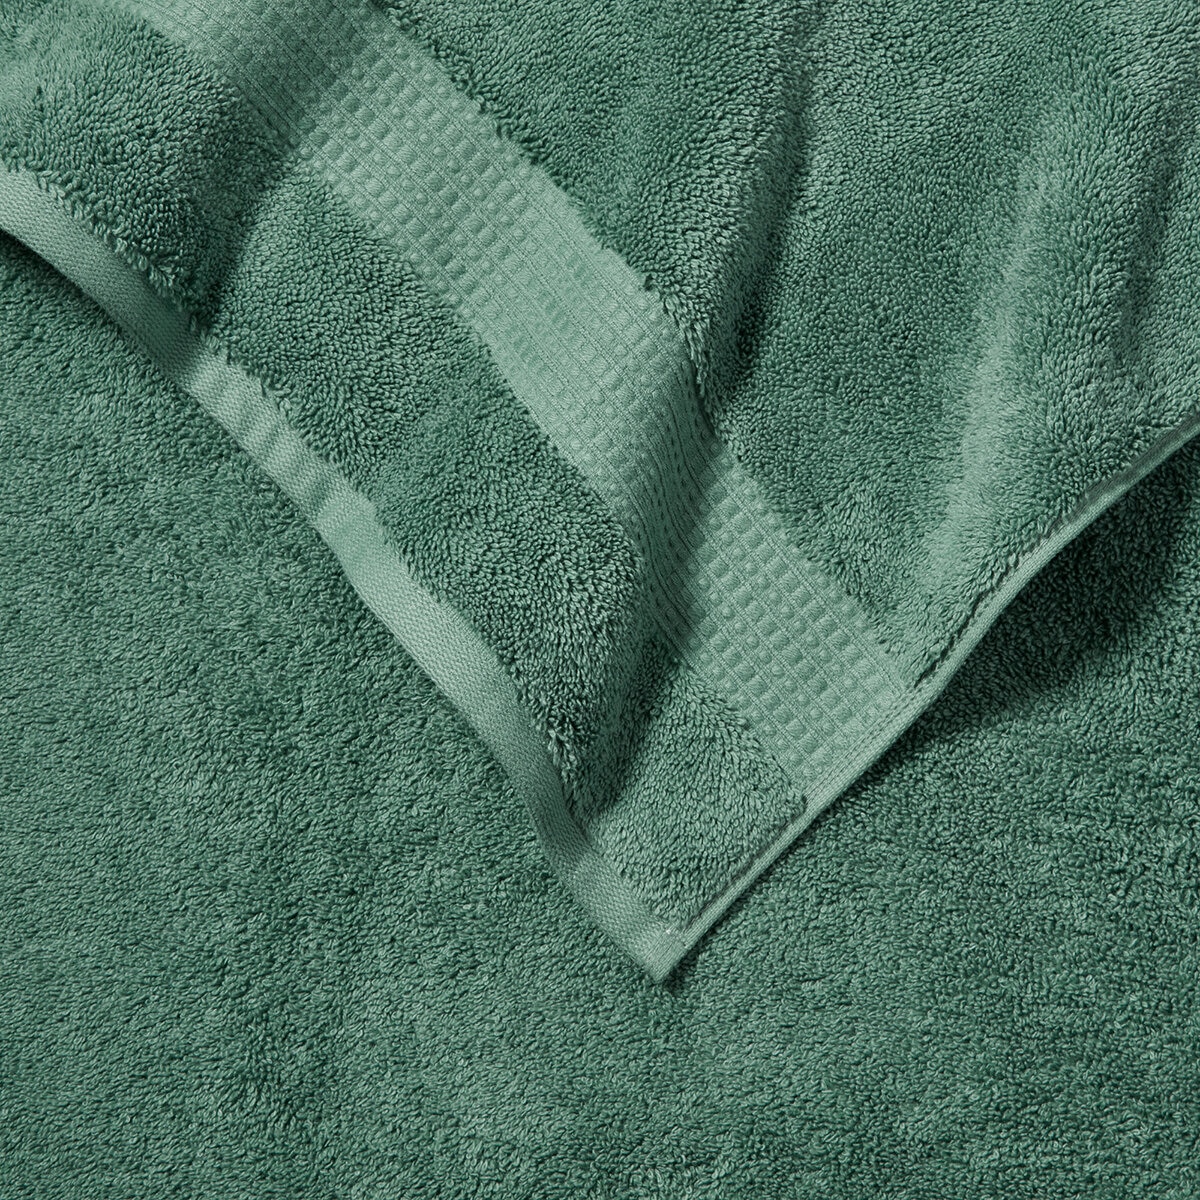 Juego de toallas modelo Cisne de color verde turquesa